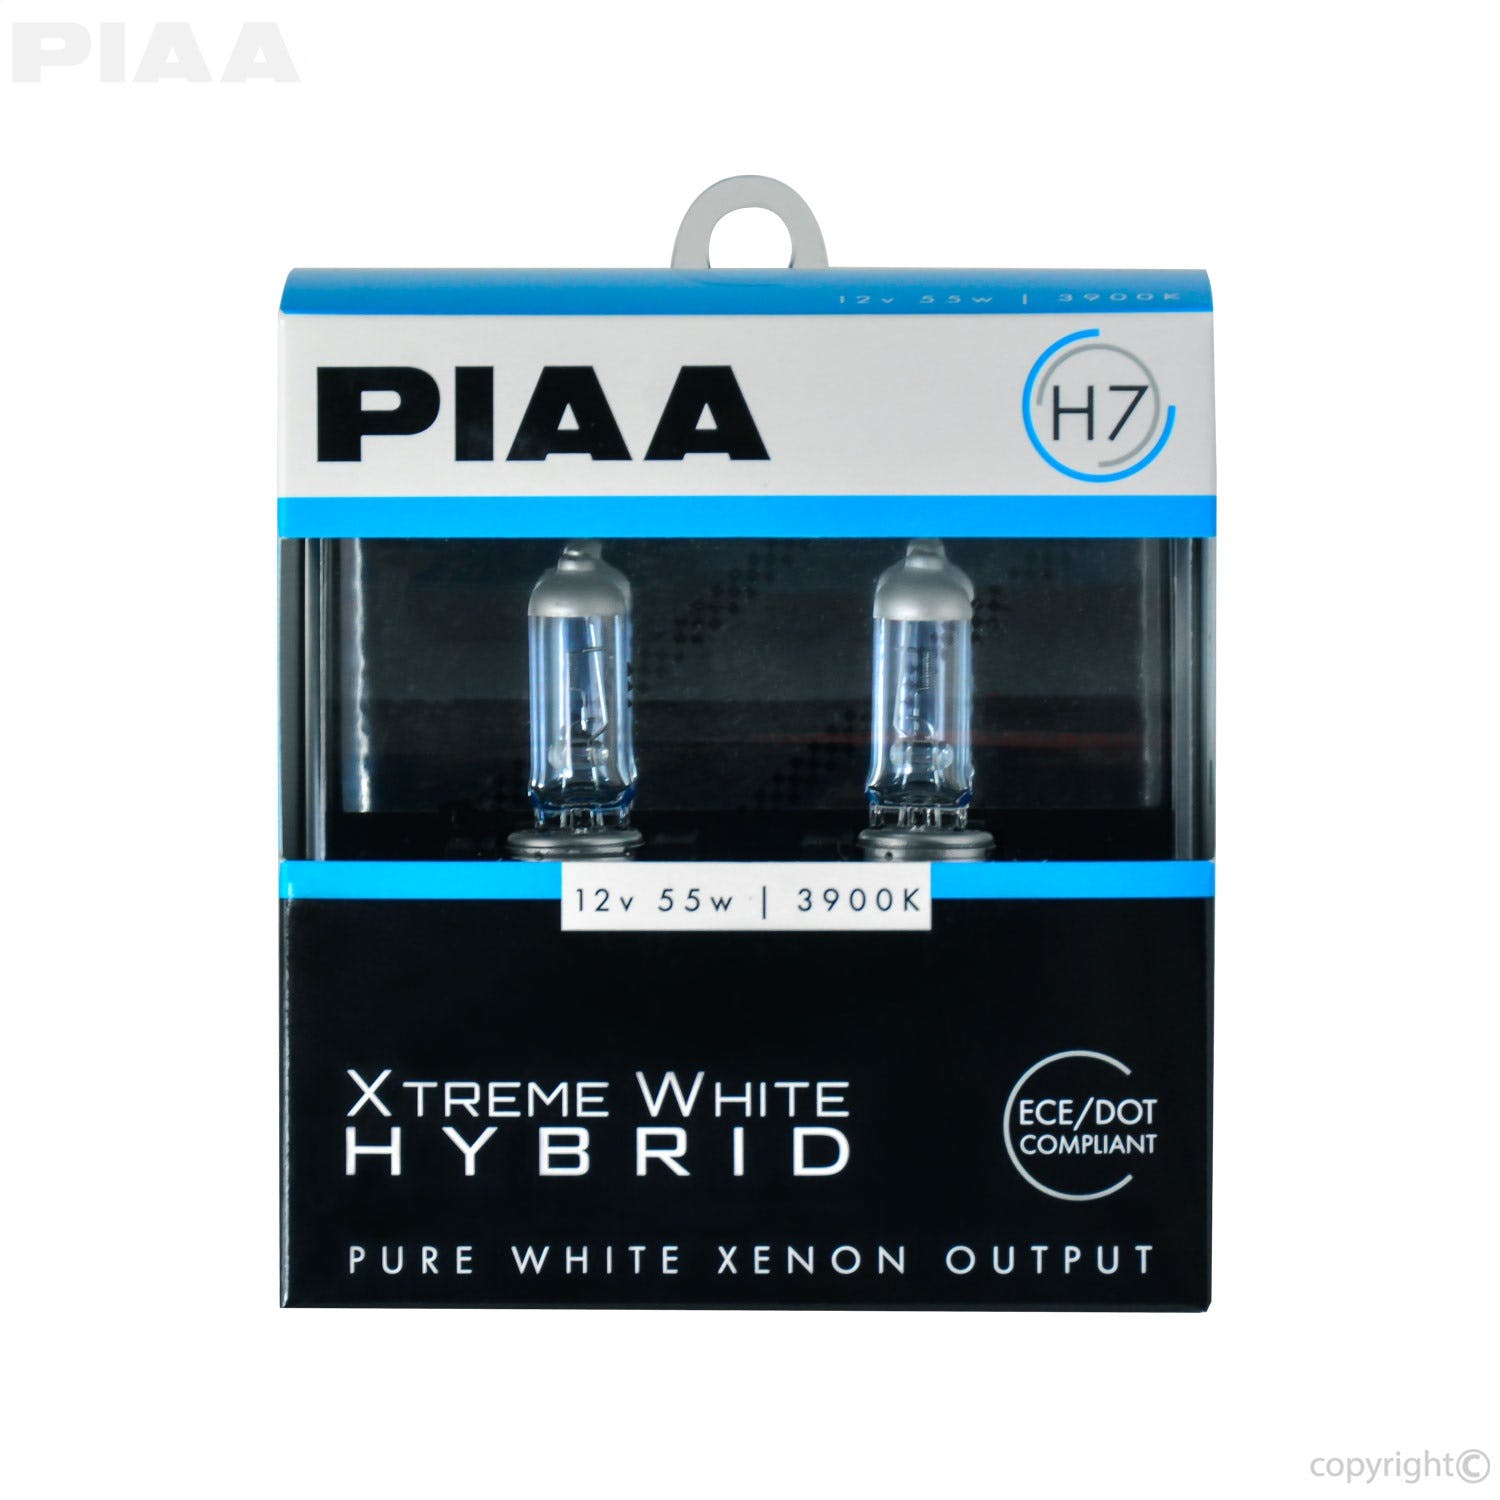 PIAA 23-10107 H7 Xtreme White Hybrid Twin Pack - 3900K - 12V 55W